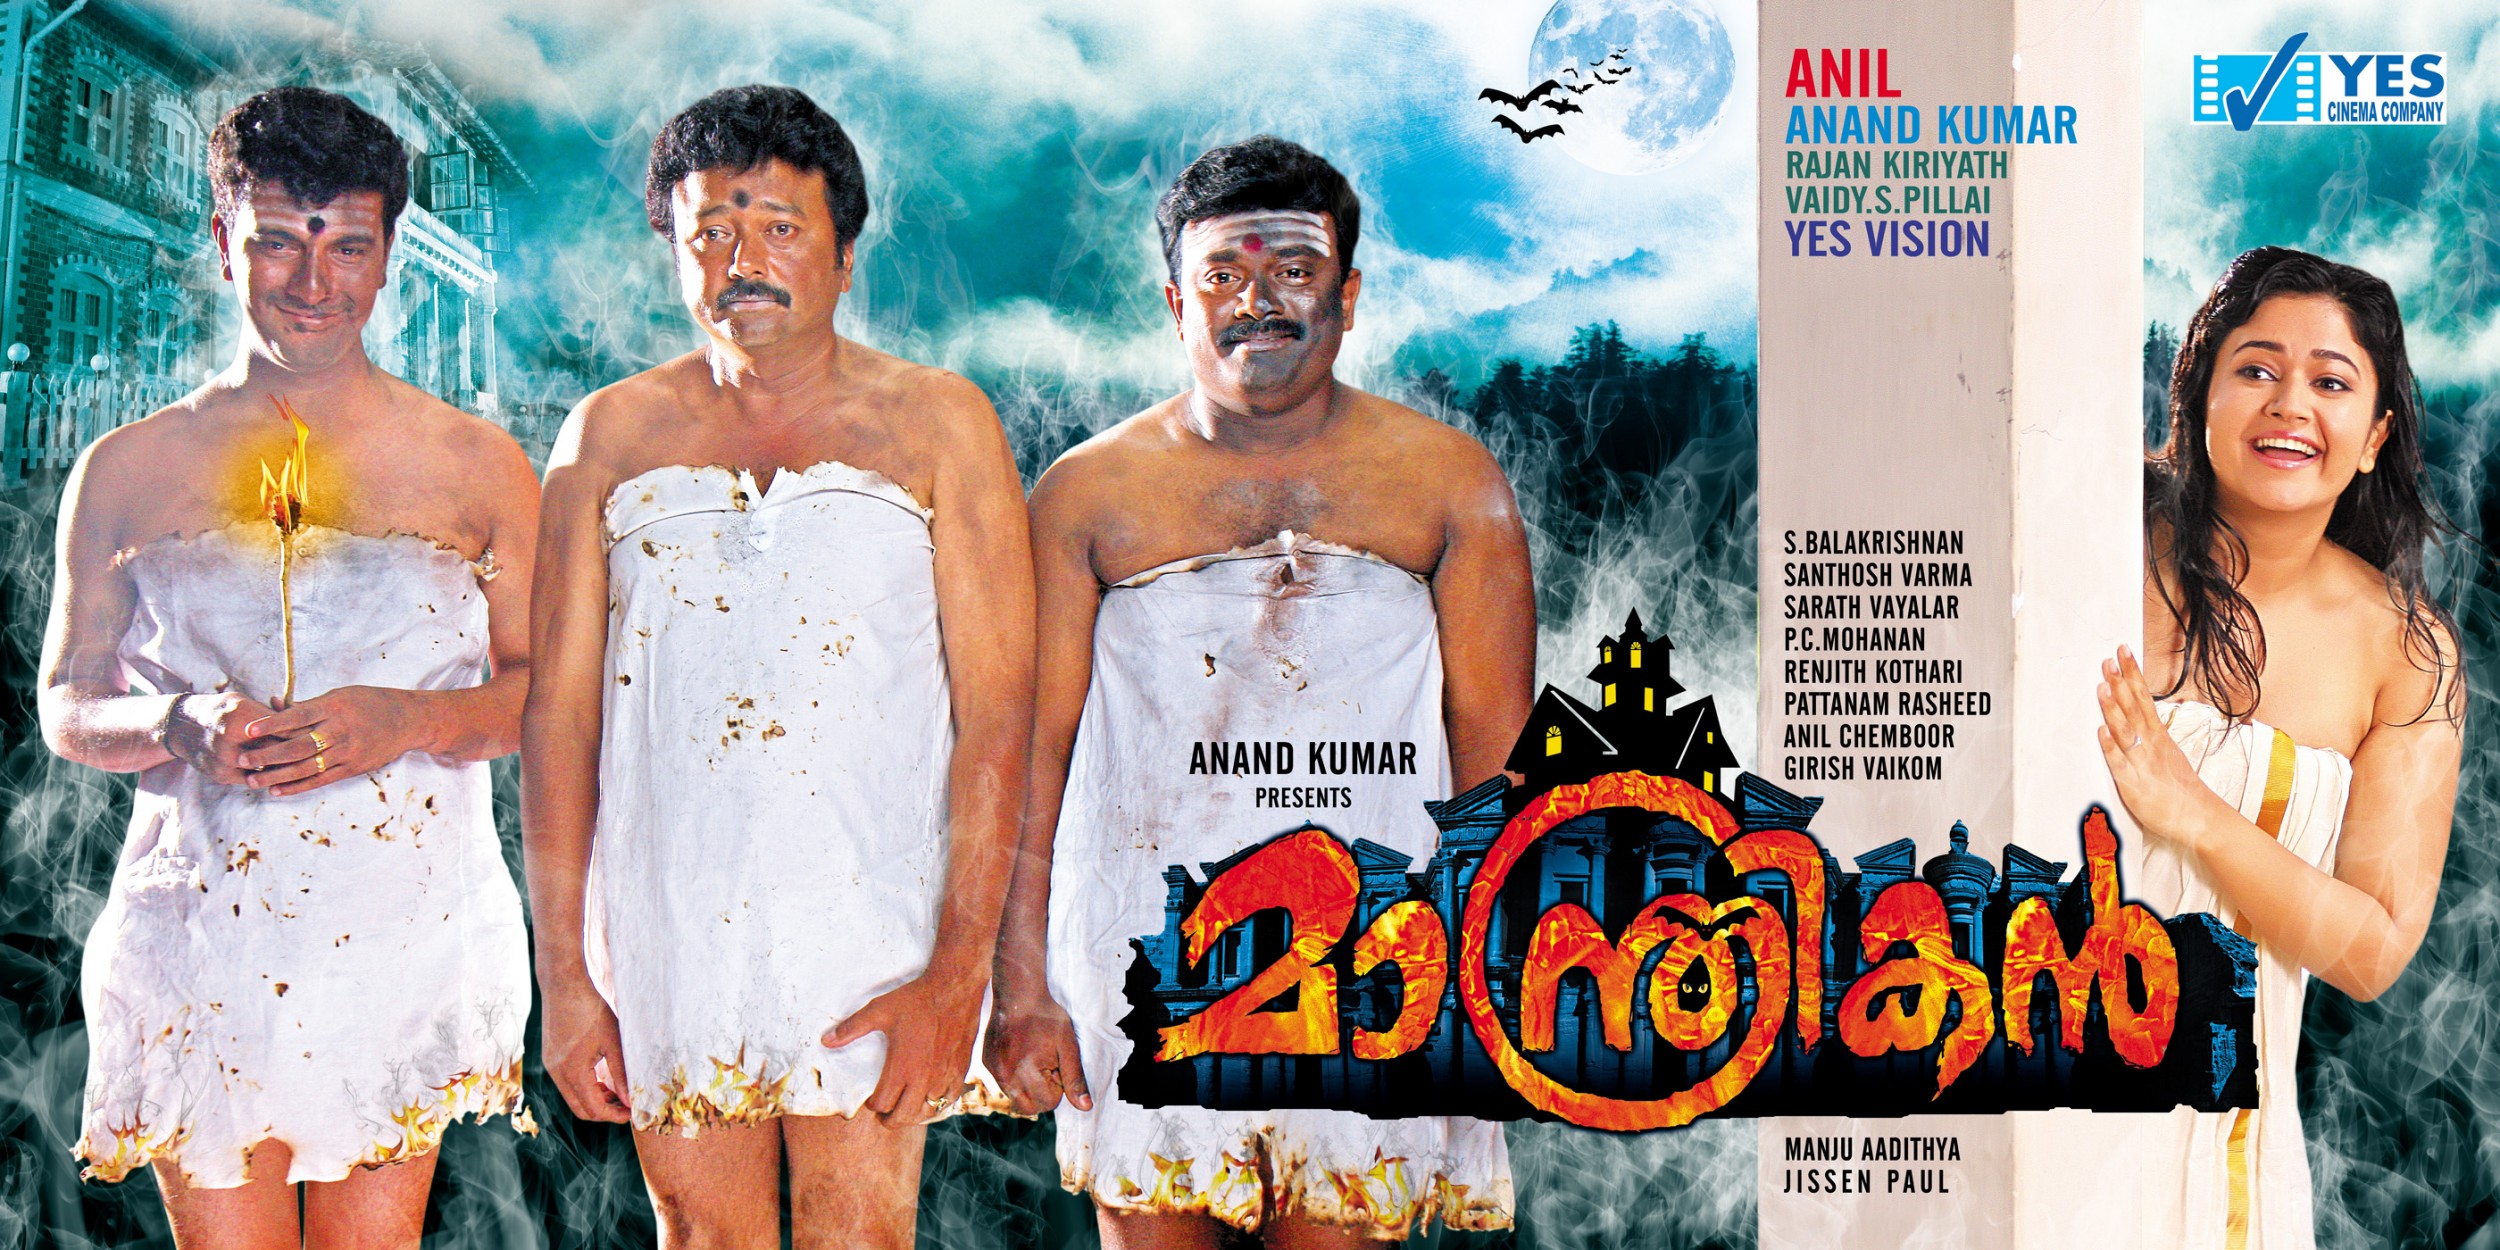 Mega Sized Movie Poster Image for Manthrikan 